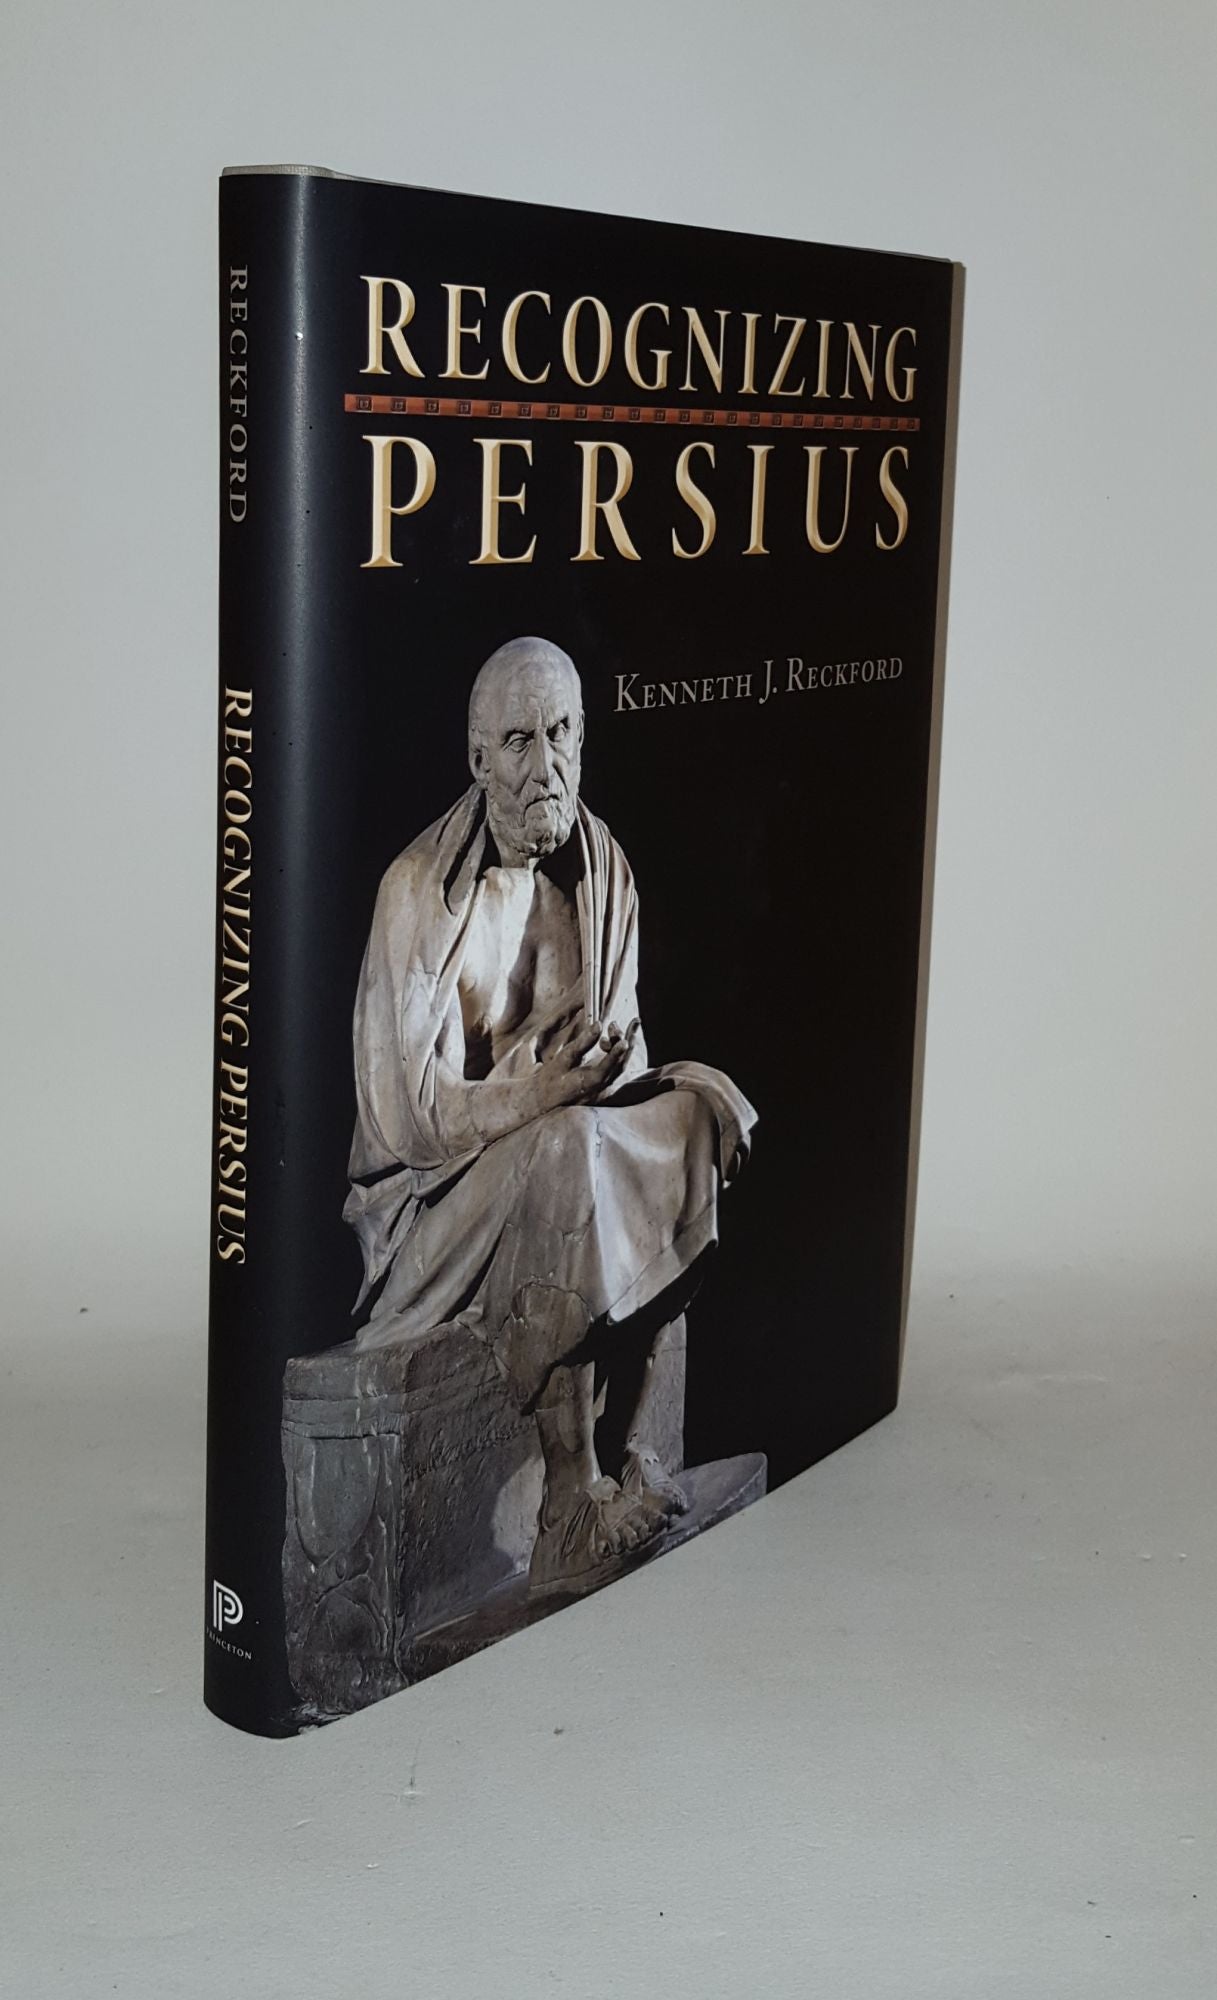 RECKFORD Kenneth J. - Recognizing Persius